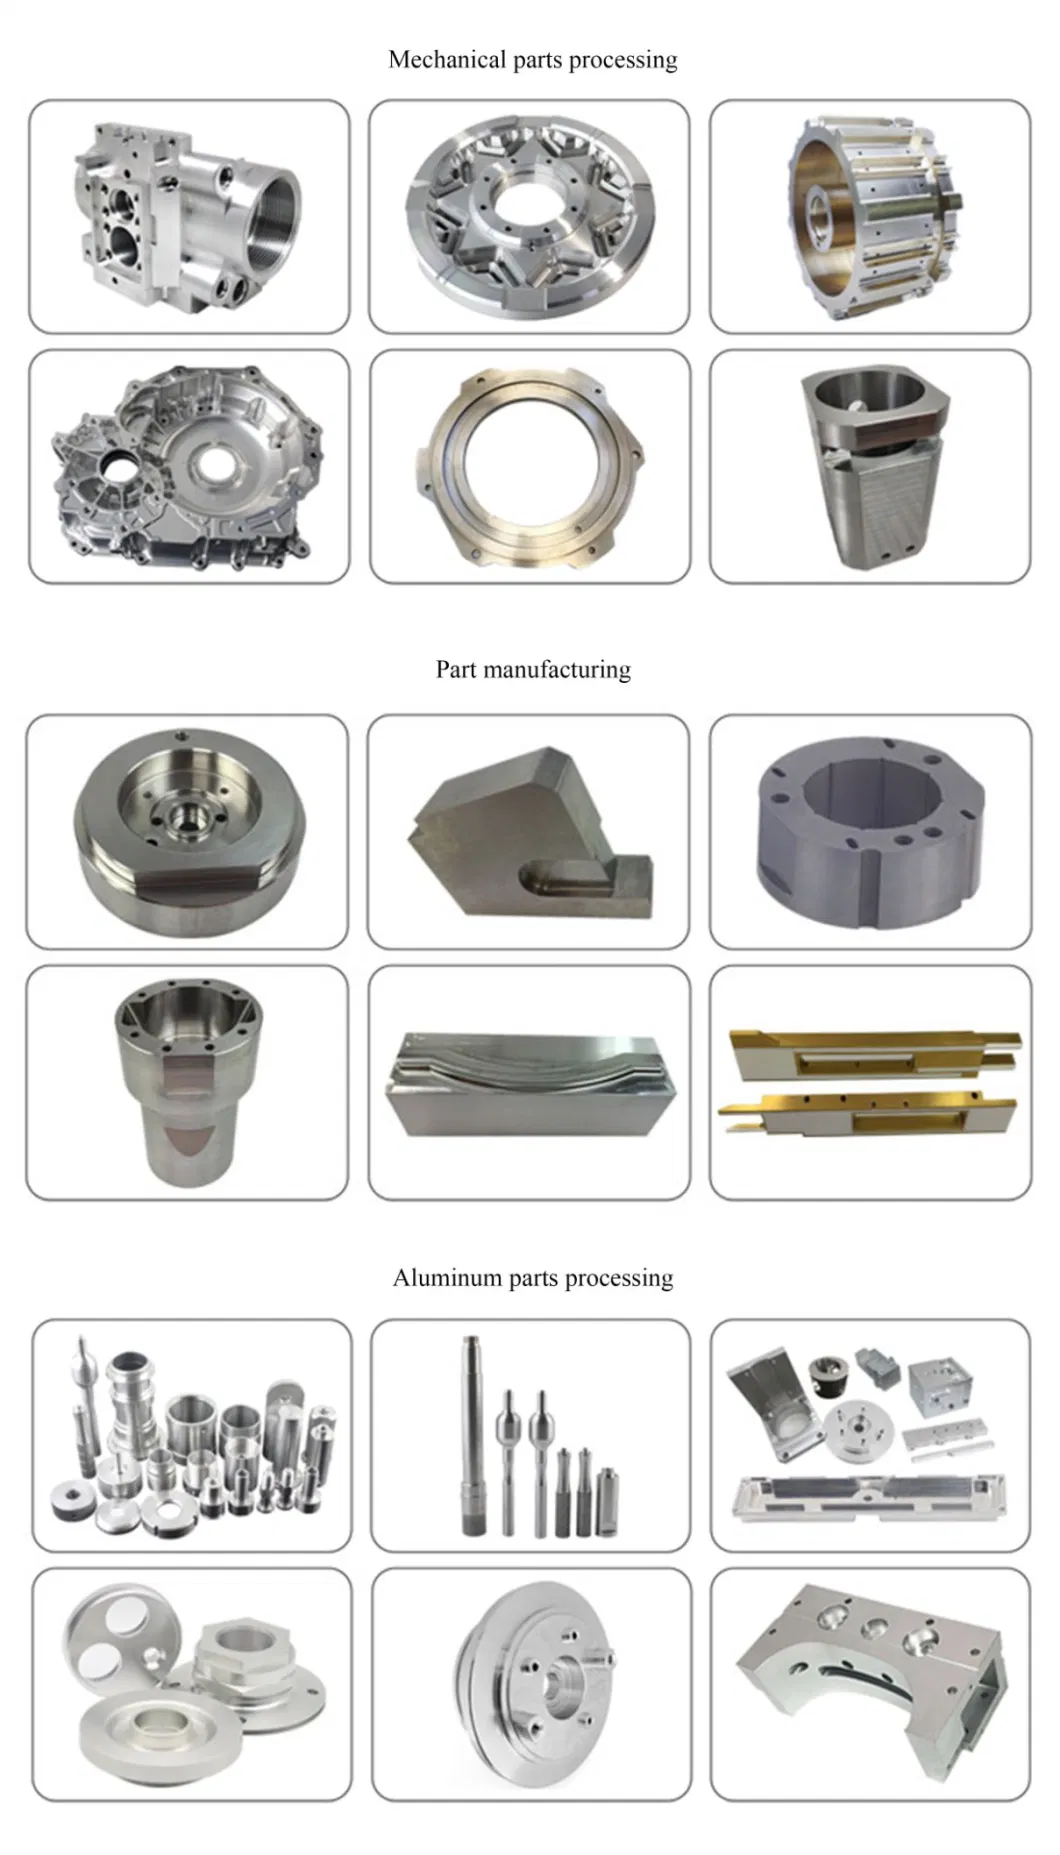 Metal-Forming Brass CNC Machine Tools